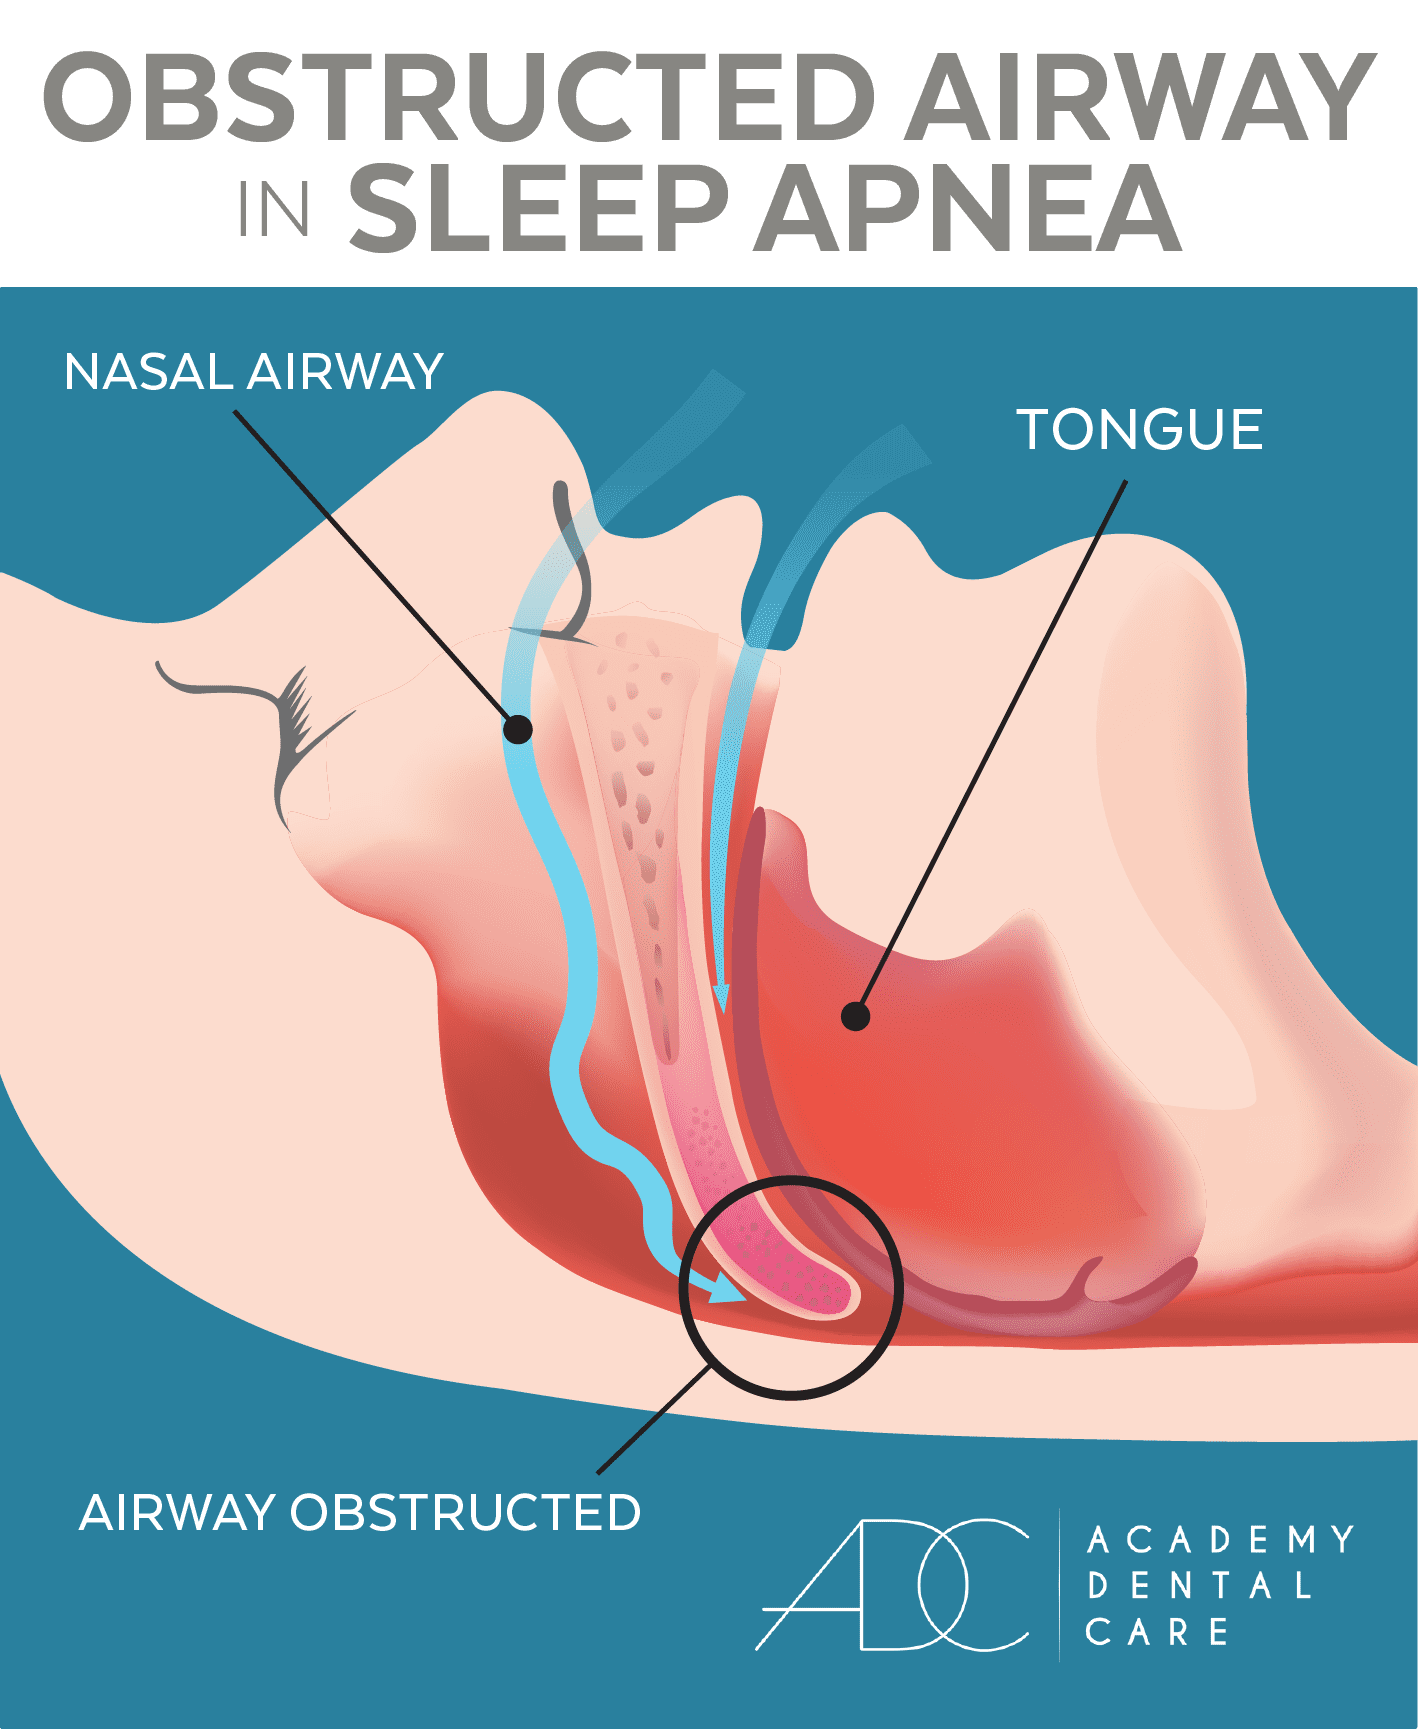 Example of Obstructed Airway in Sleep Apnea